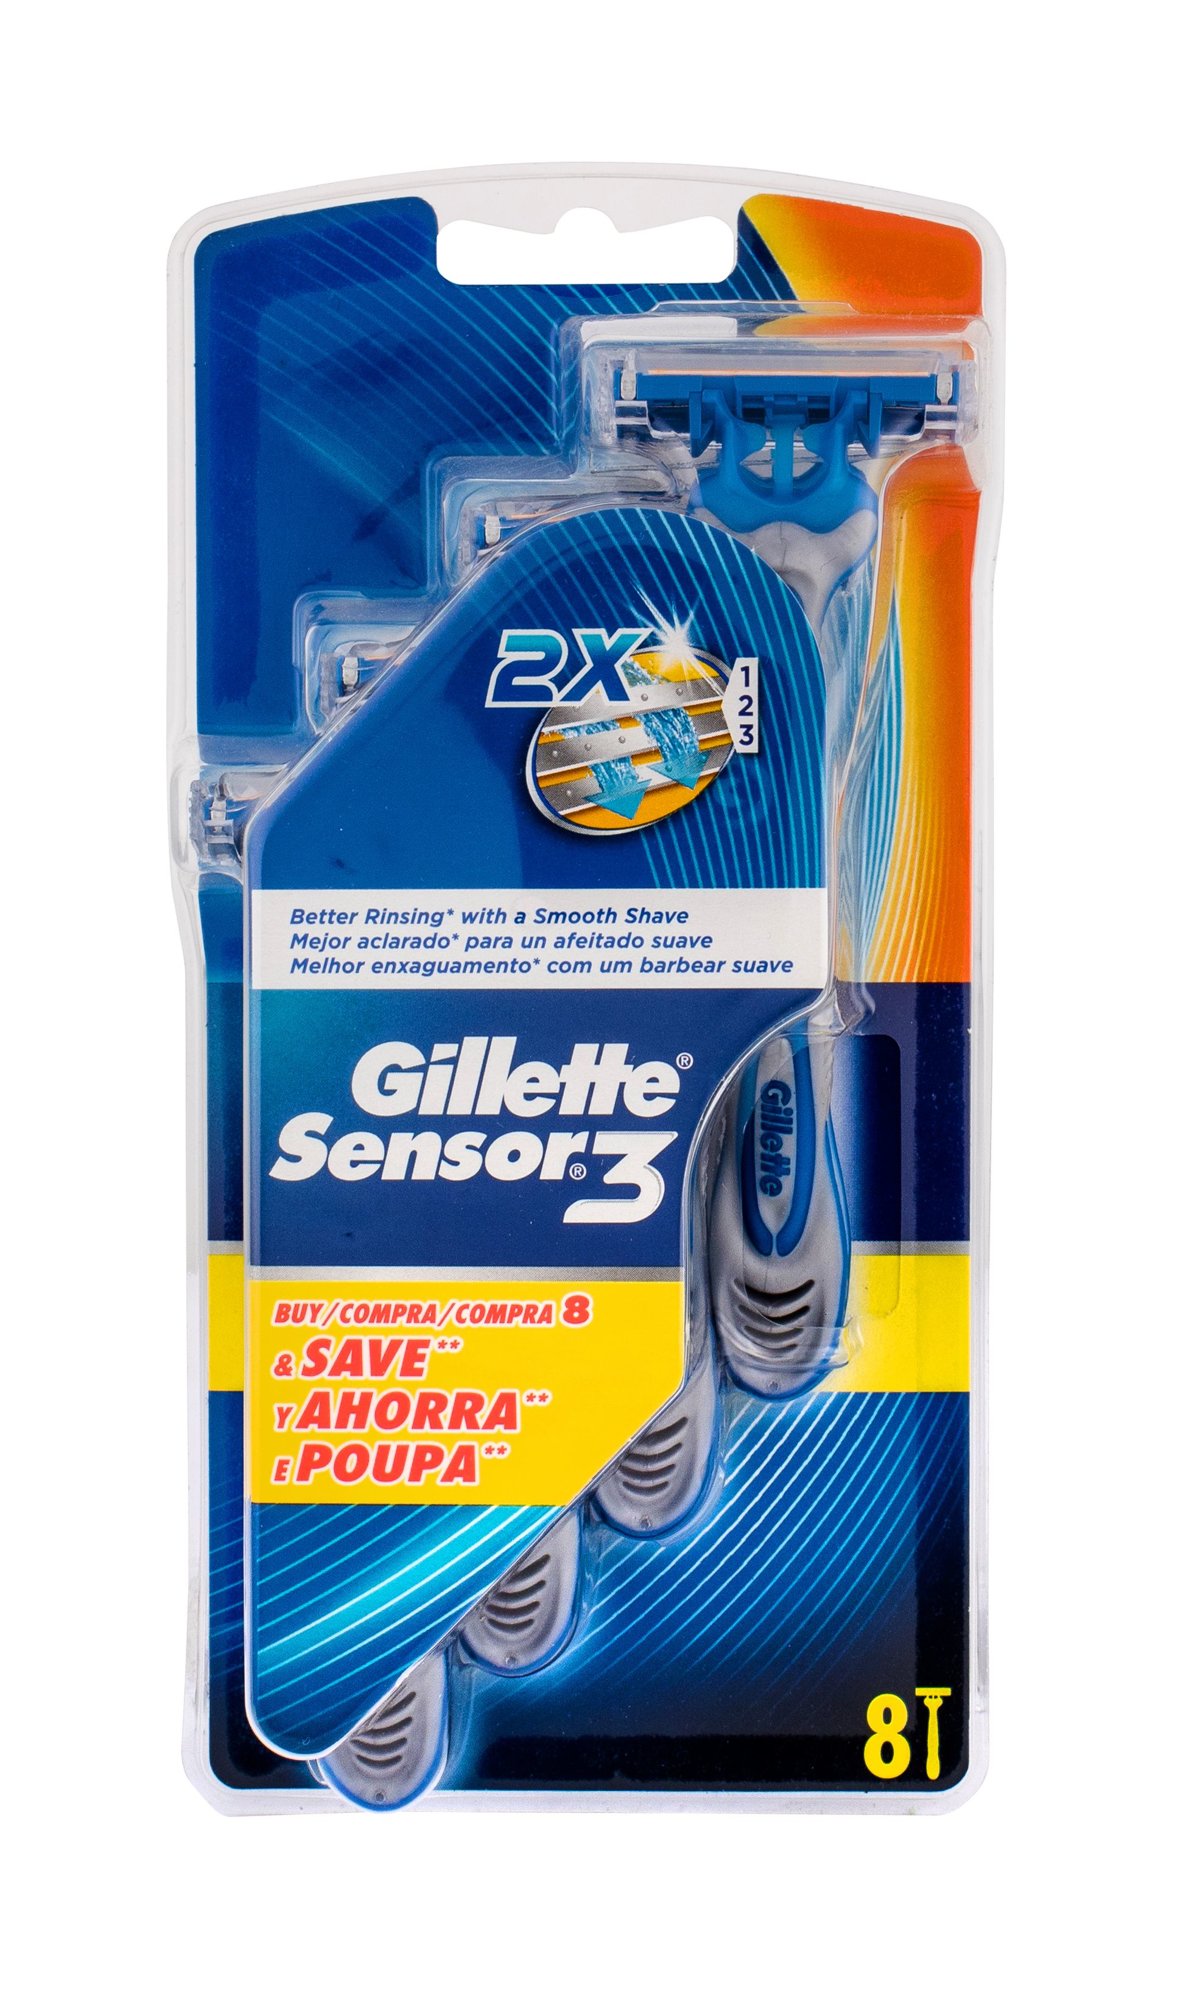 Gillette Sensor3 skustuvas